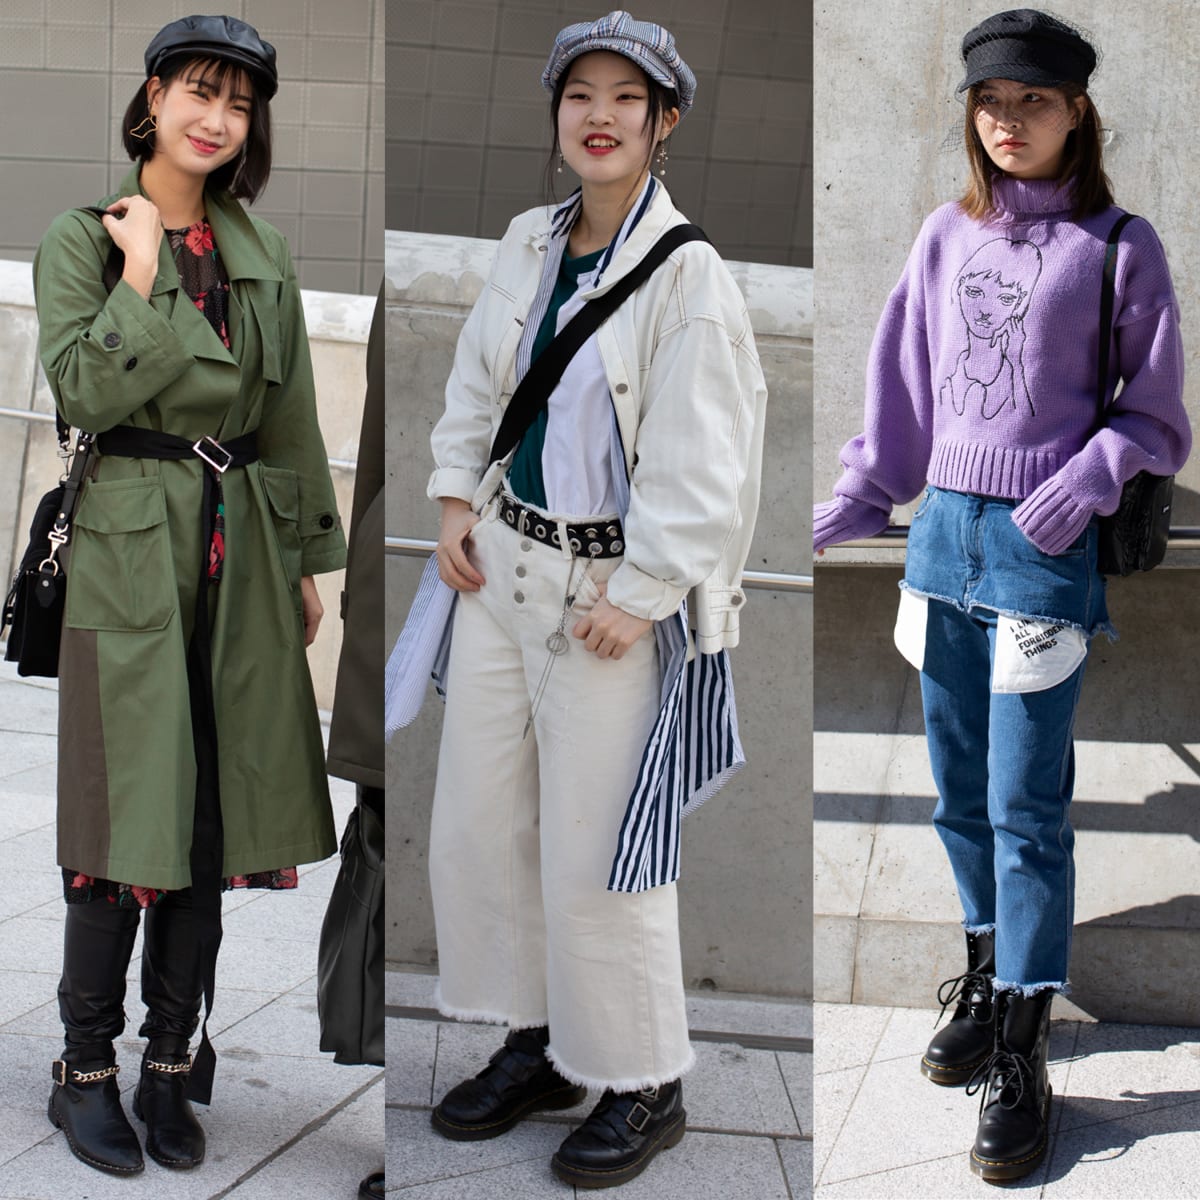 Baker Boy Caps Were A Street Style Staple At Seoul Fashion Week